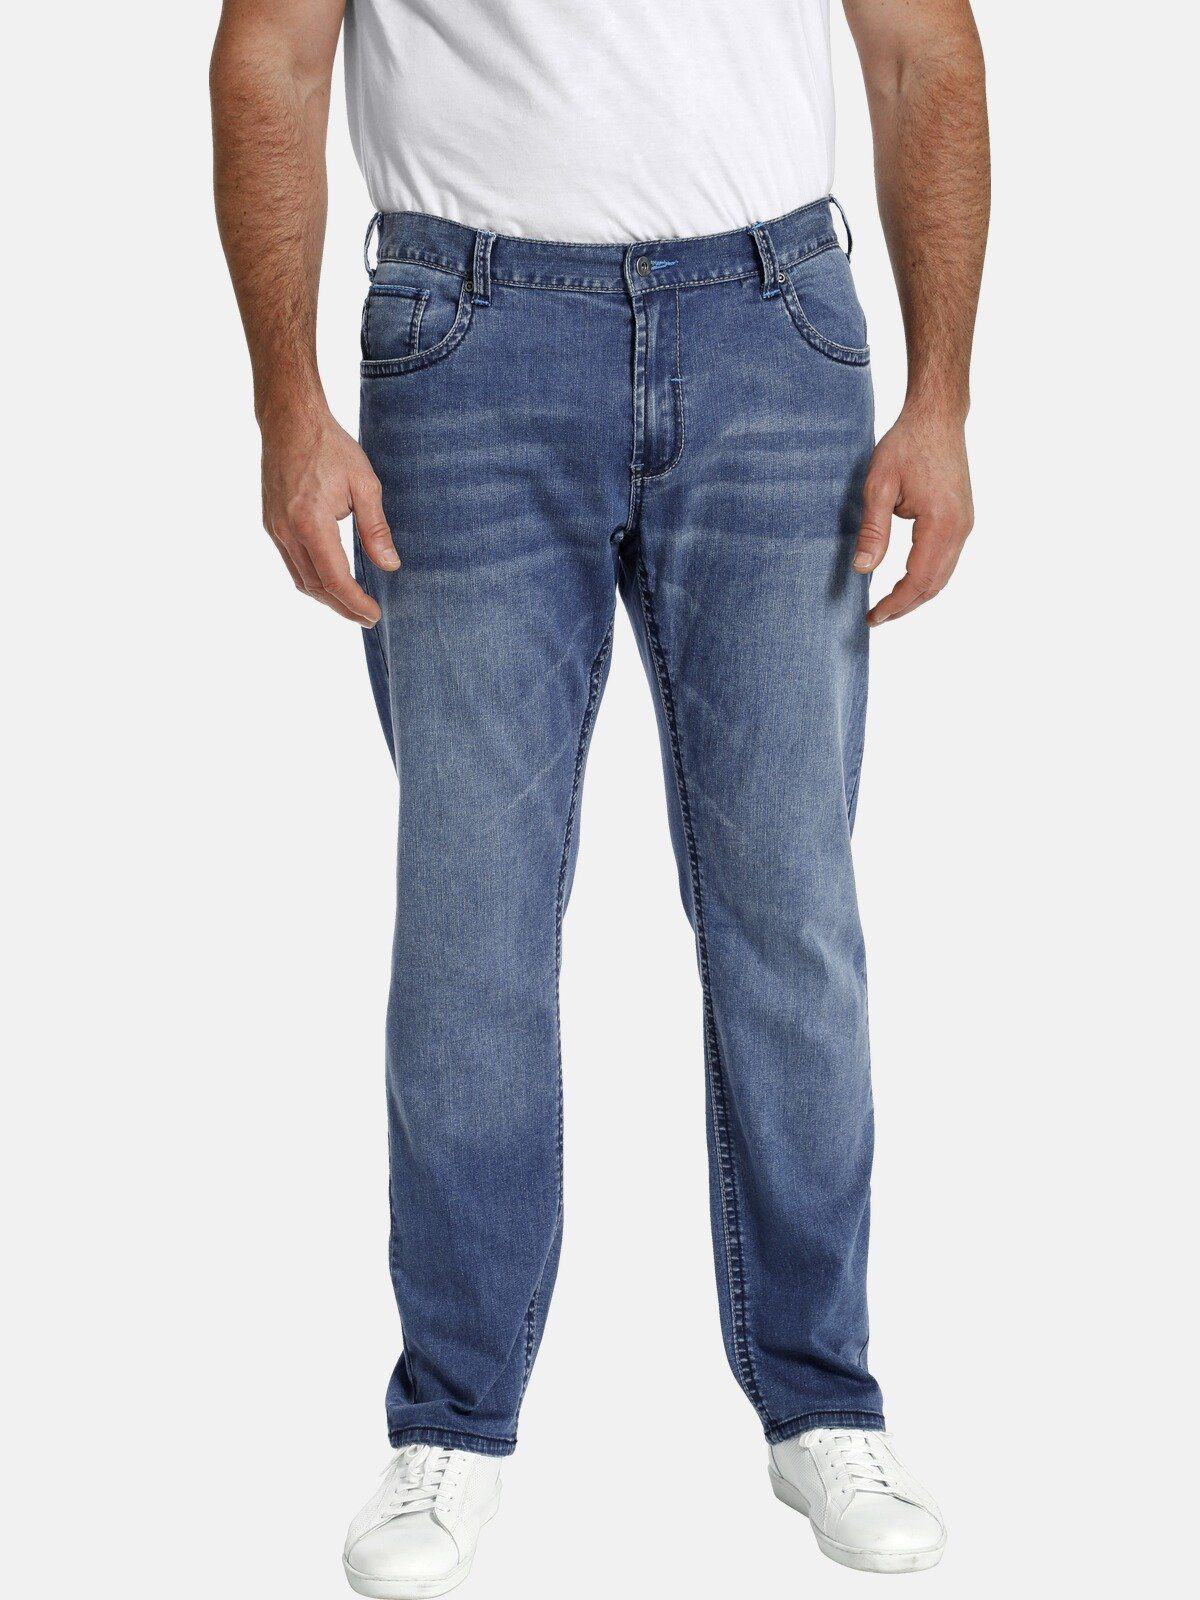 Charles Colby 5-Pocket-Jeans BARON SAWYER +Fit Kollektion, Tiefbundjeans | Straight-Fit Jeans